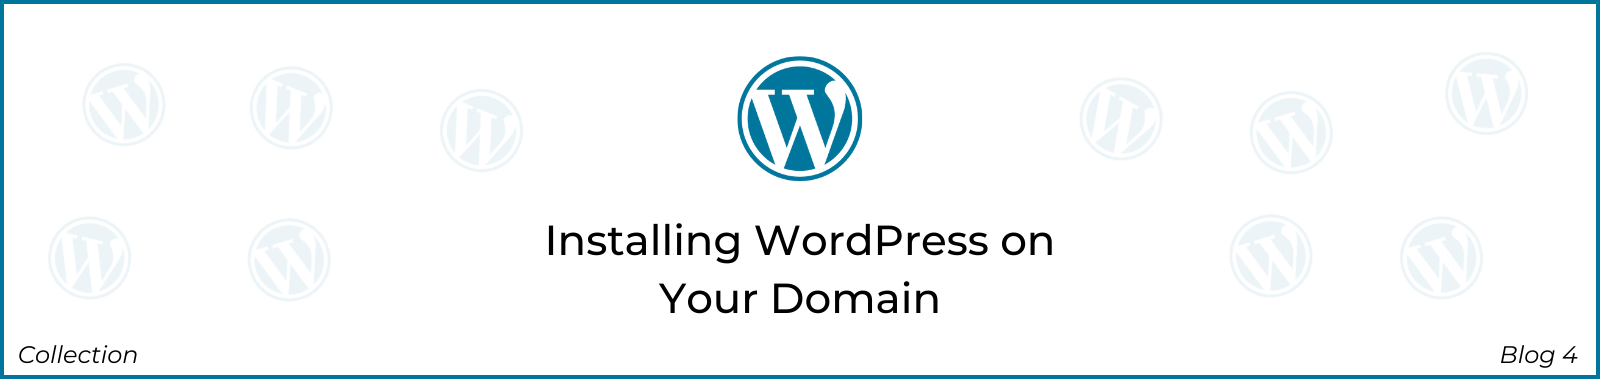 Installing WordPress on Your Domain